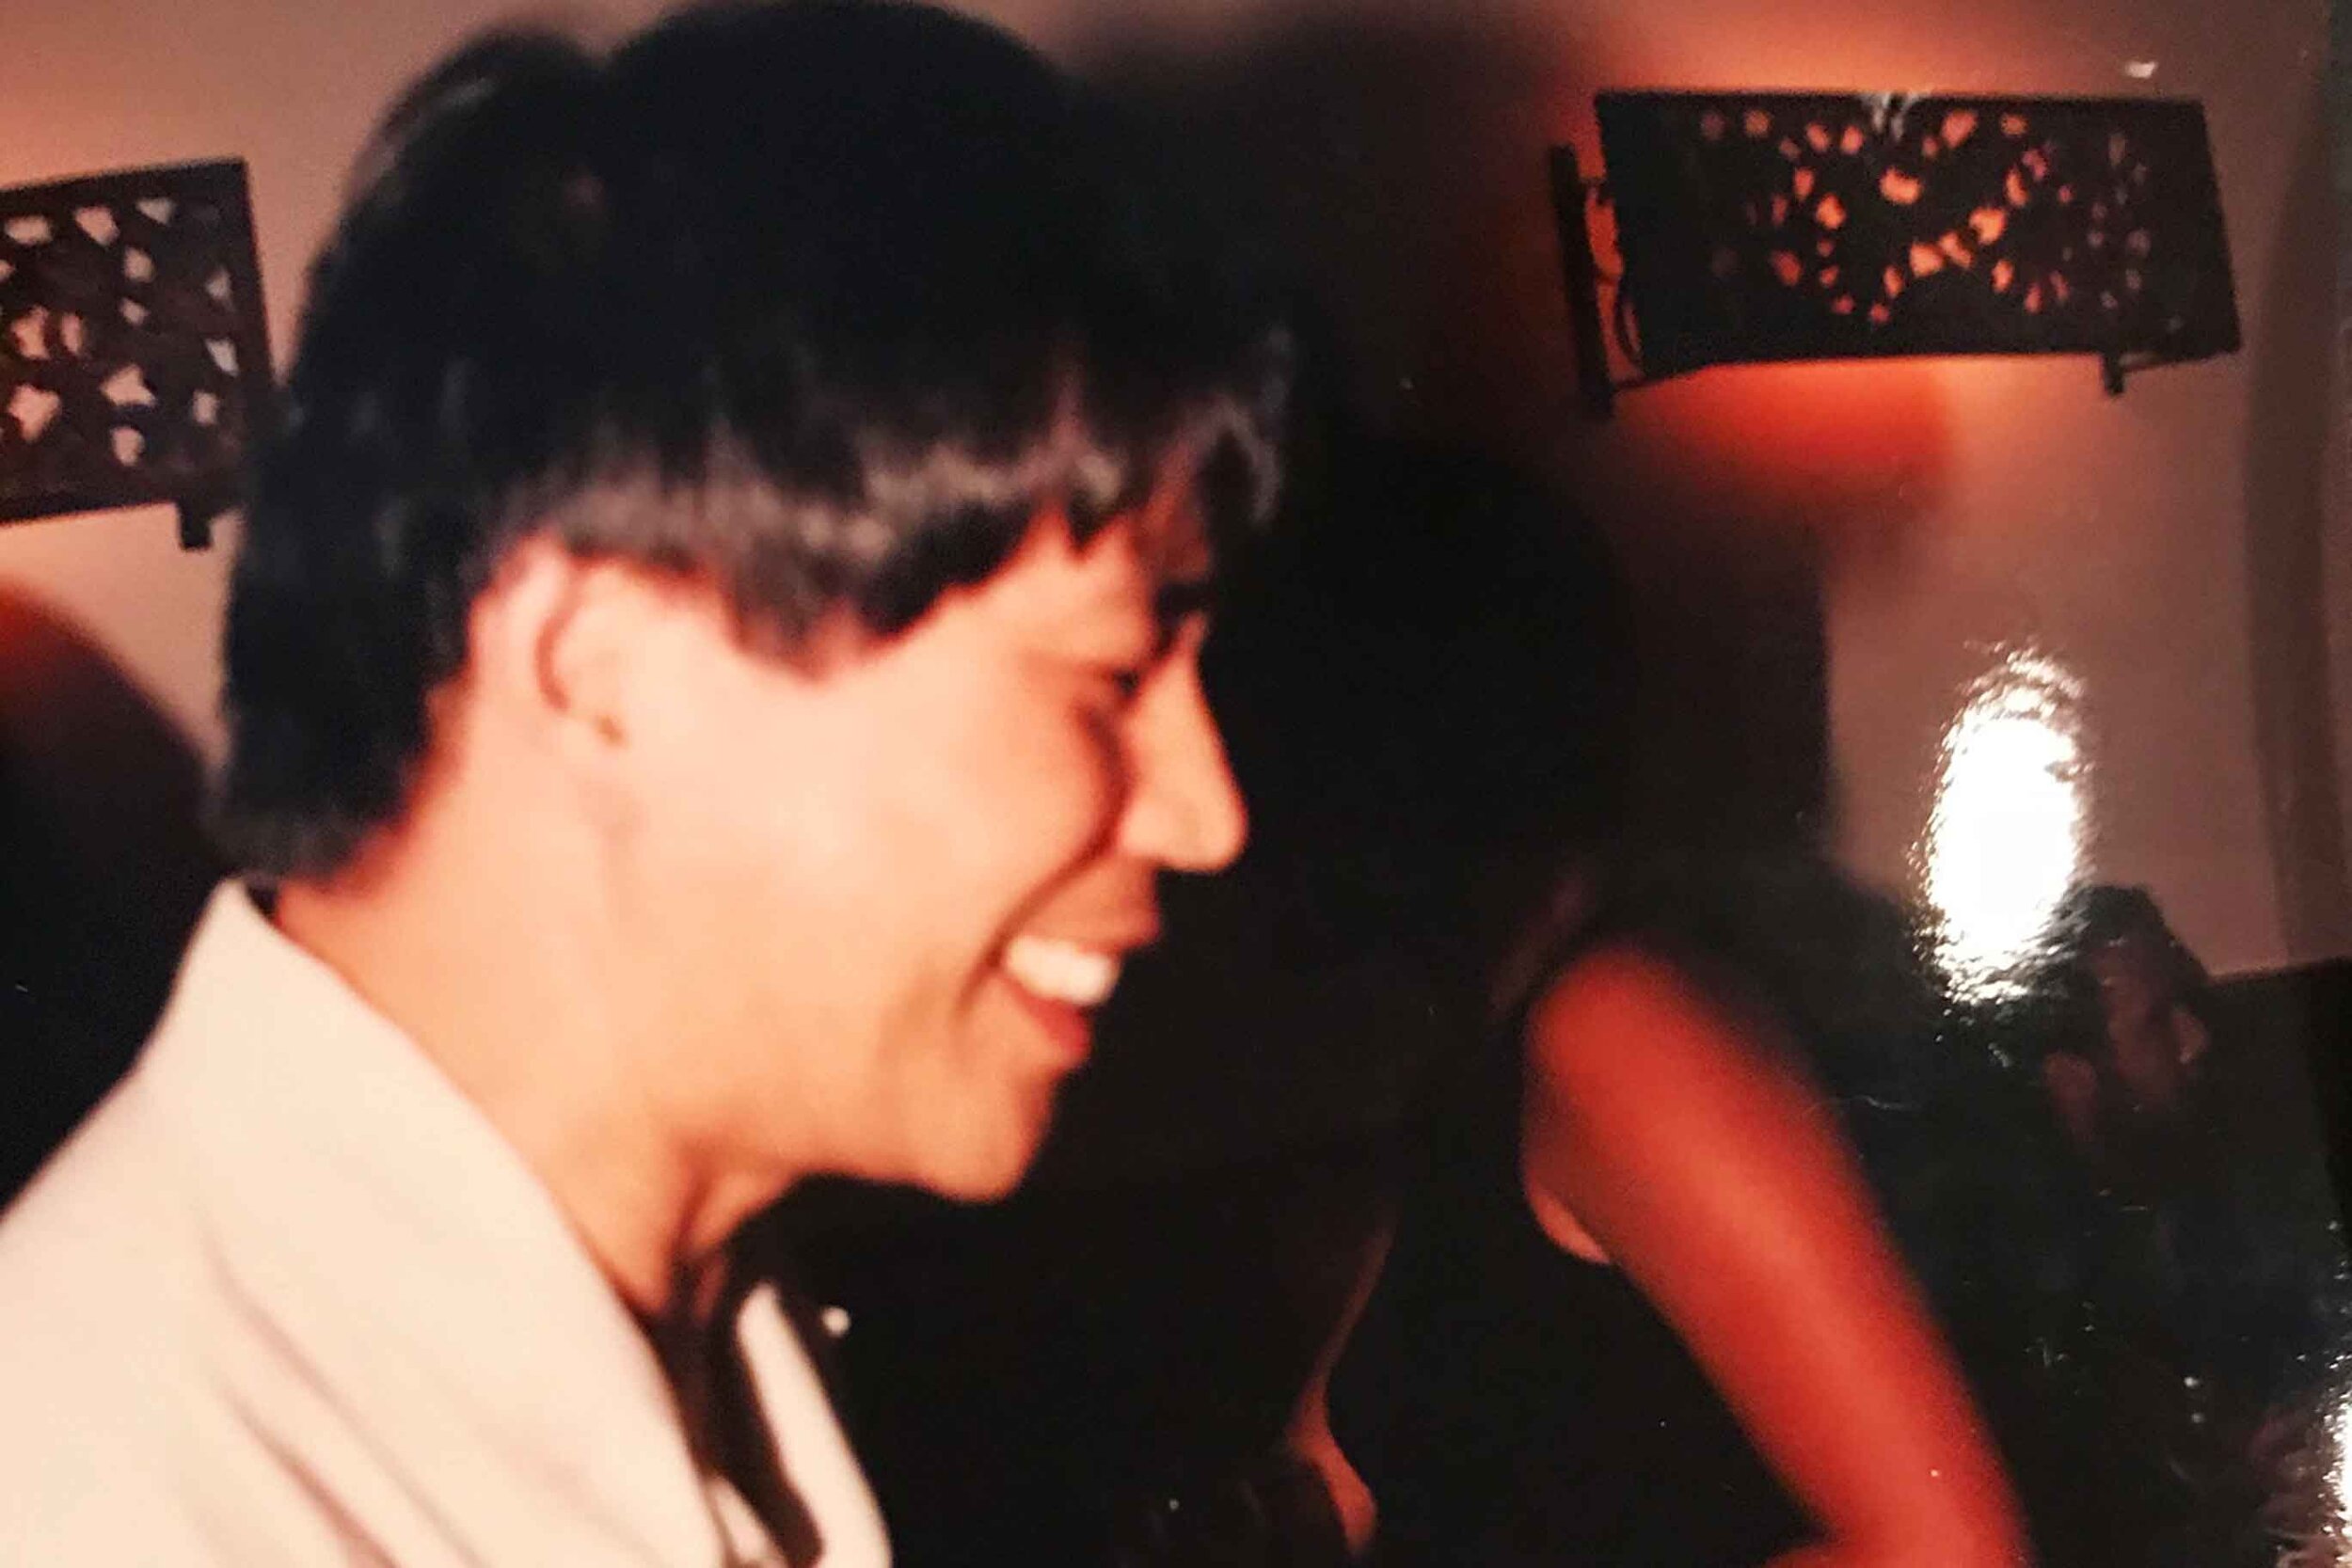  Chef Romy Dorotan on opening night at Cendrillon in SoHo, New York in August 1995. Courtesy of Amy Besa.  